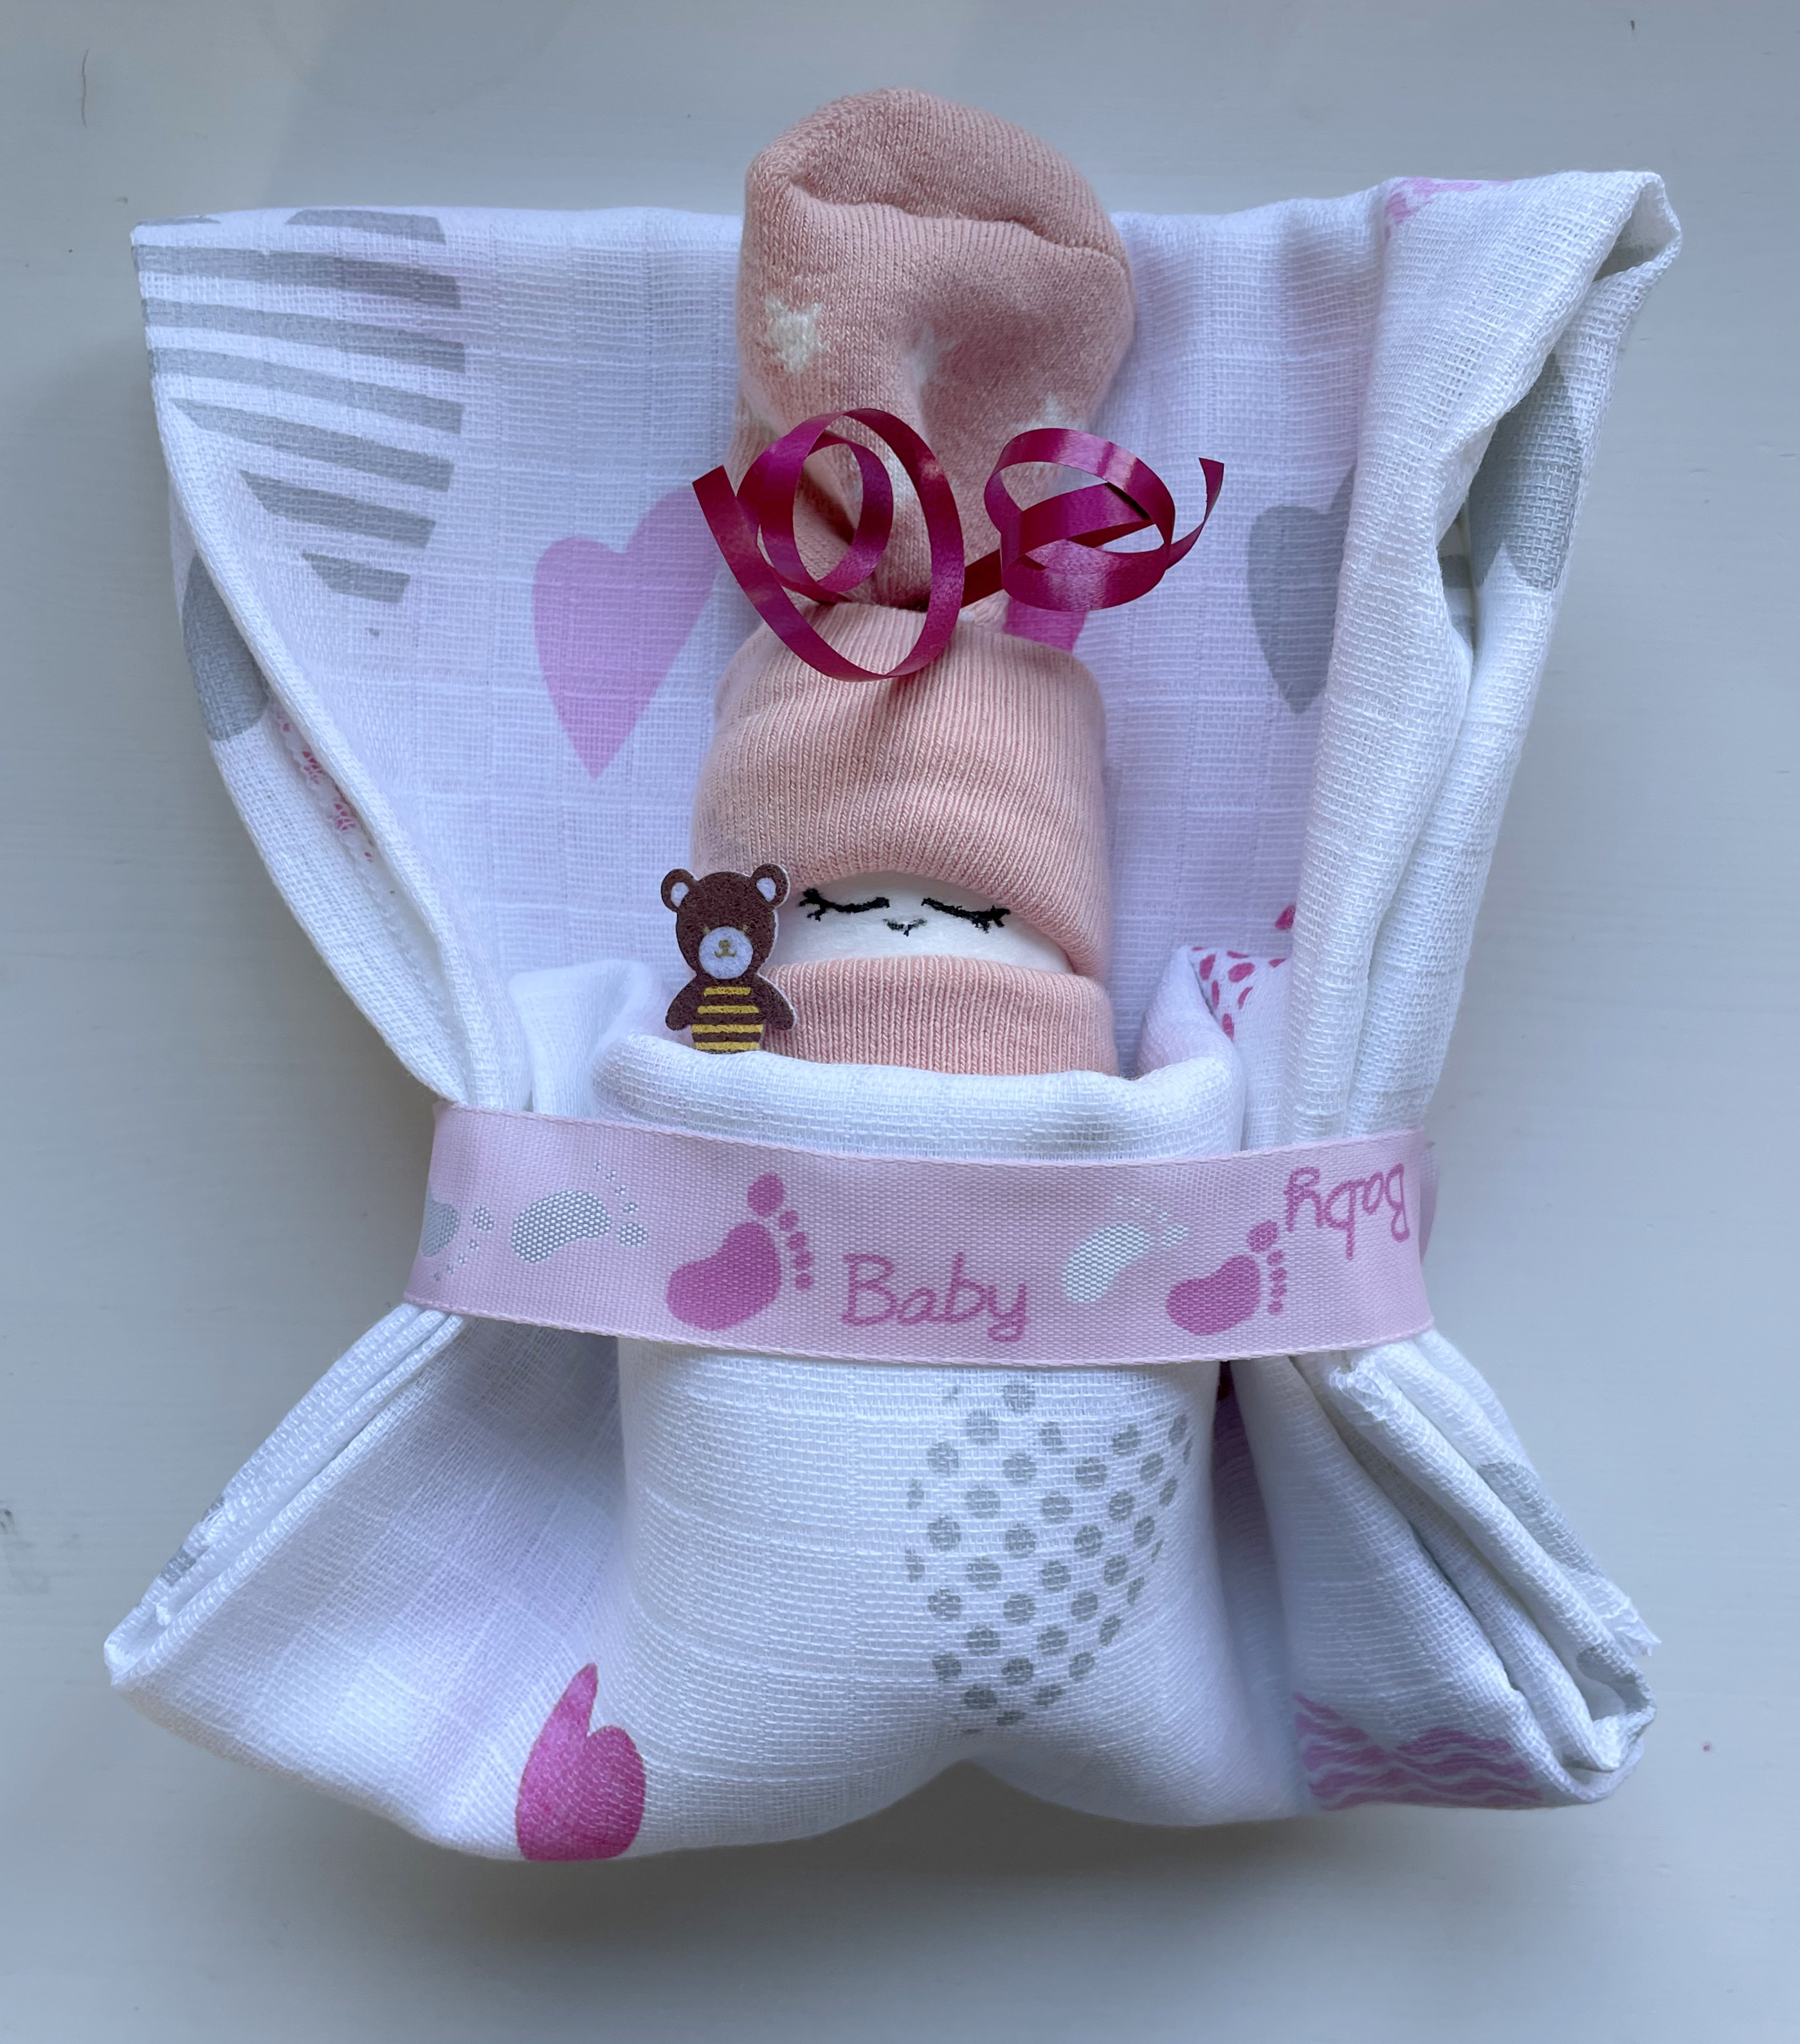 a cute little diaper baby in a "sleeping bag"